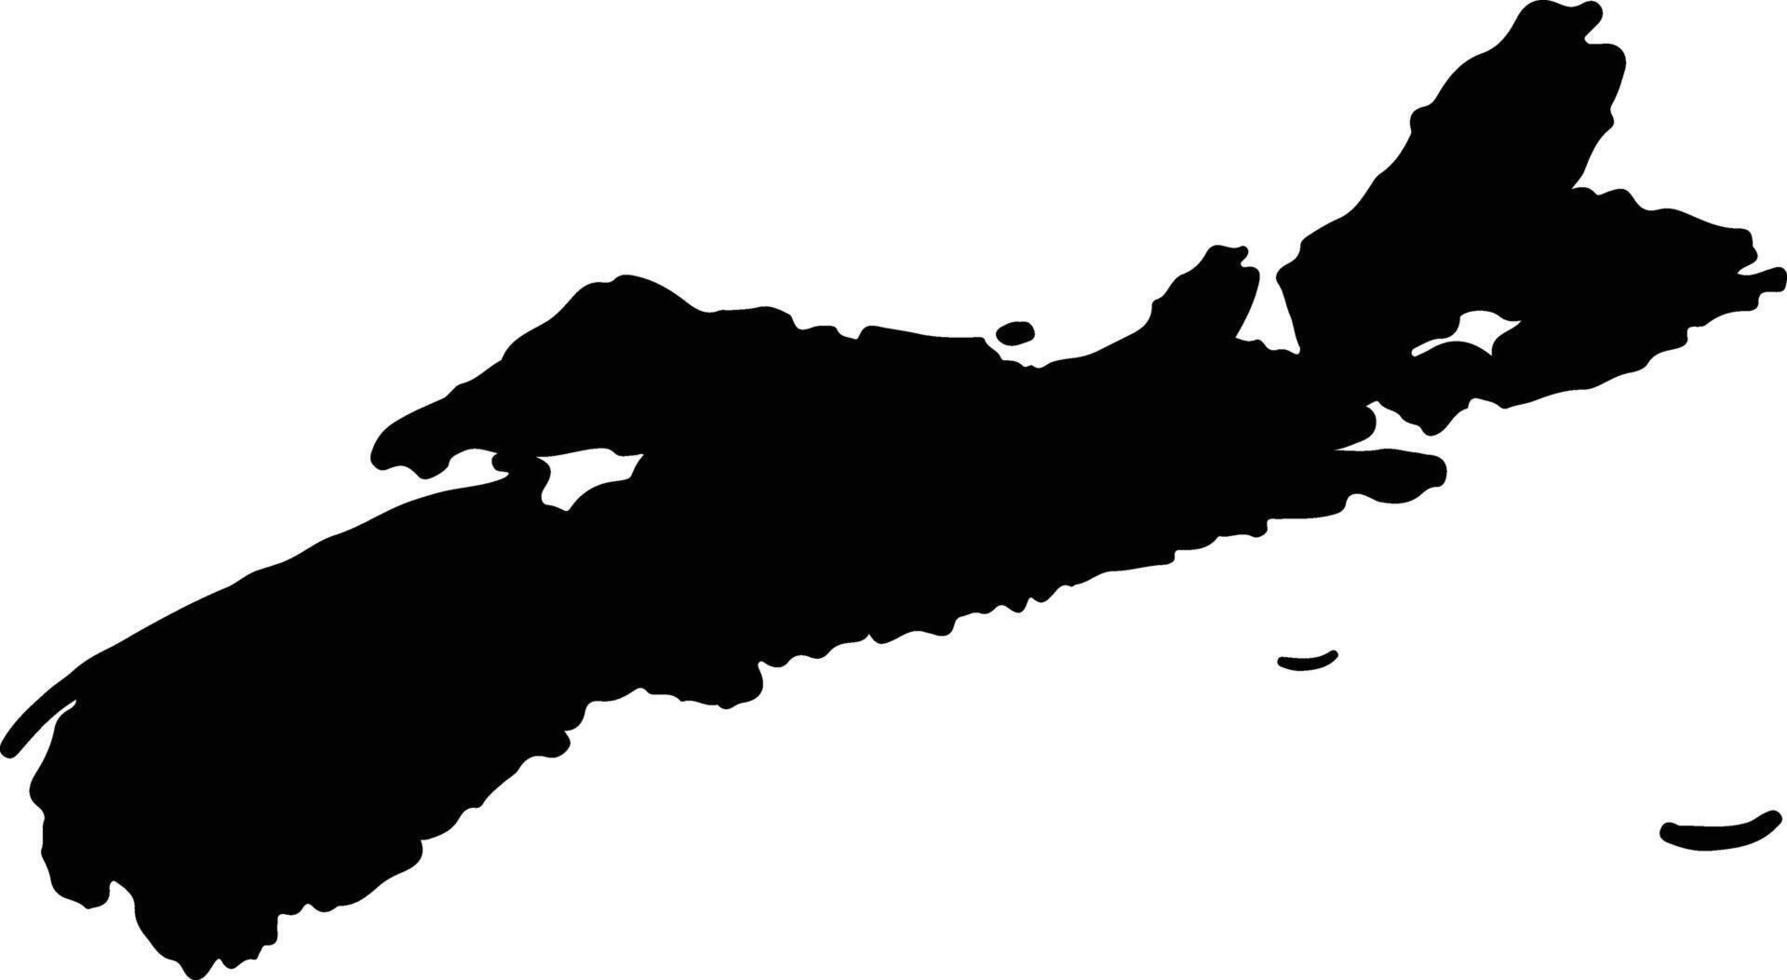 Nova Scotia Canada silhouette map vector